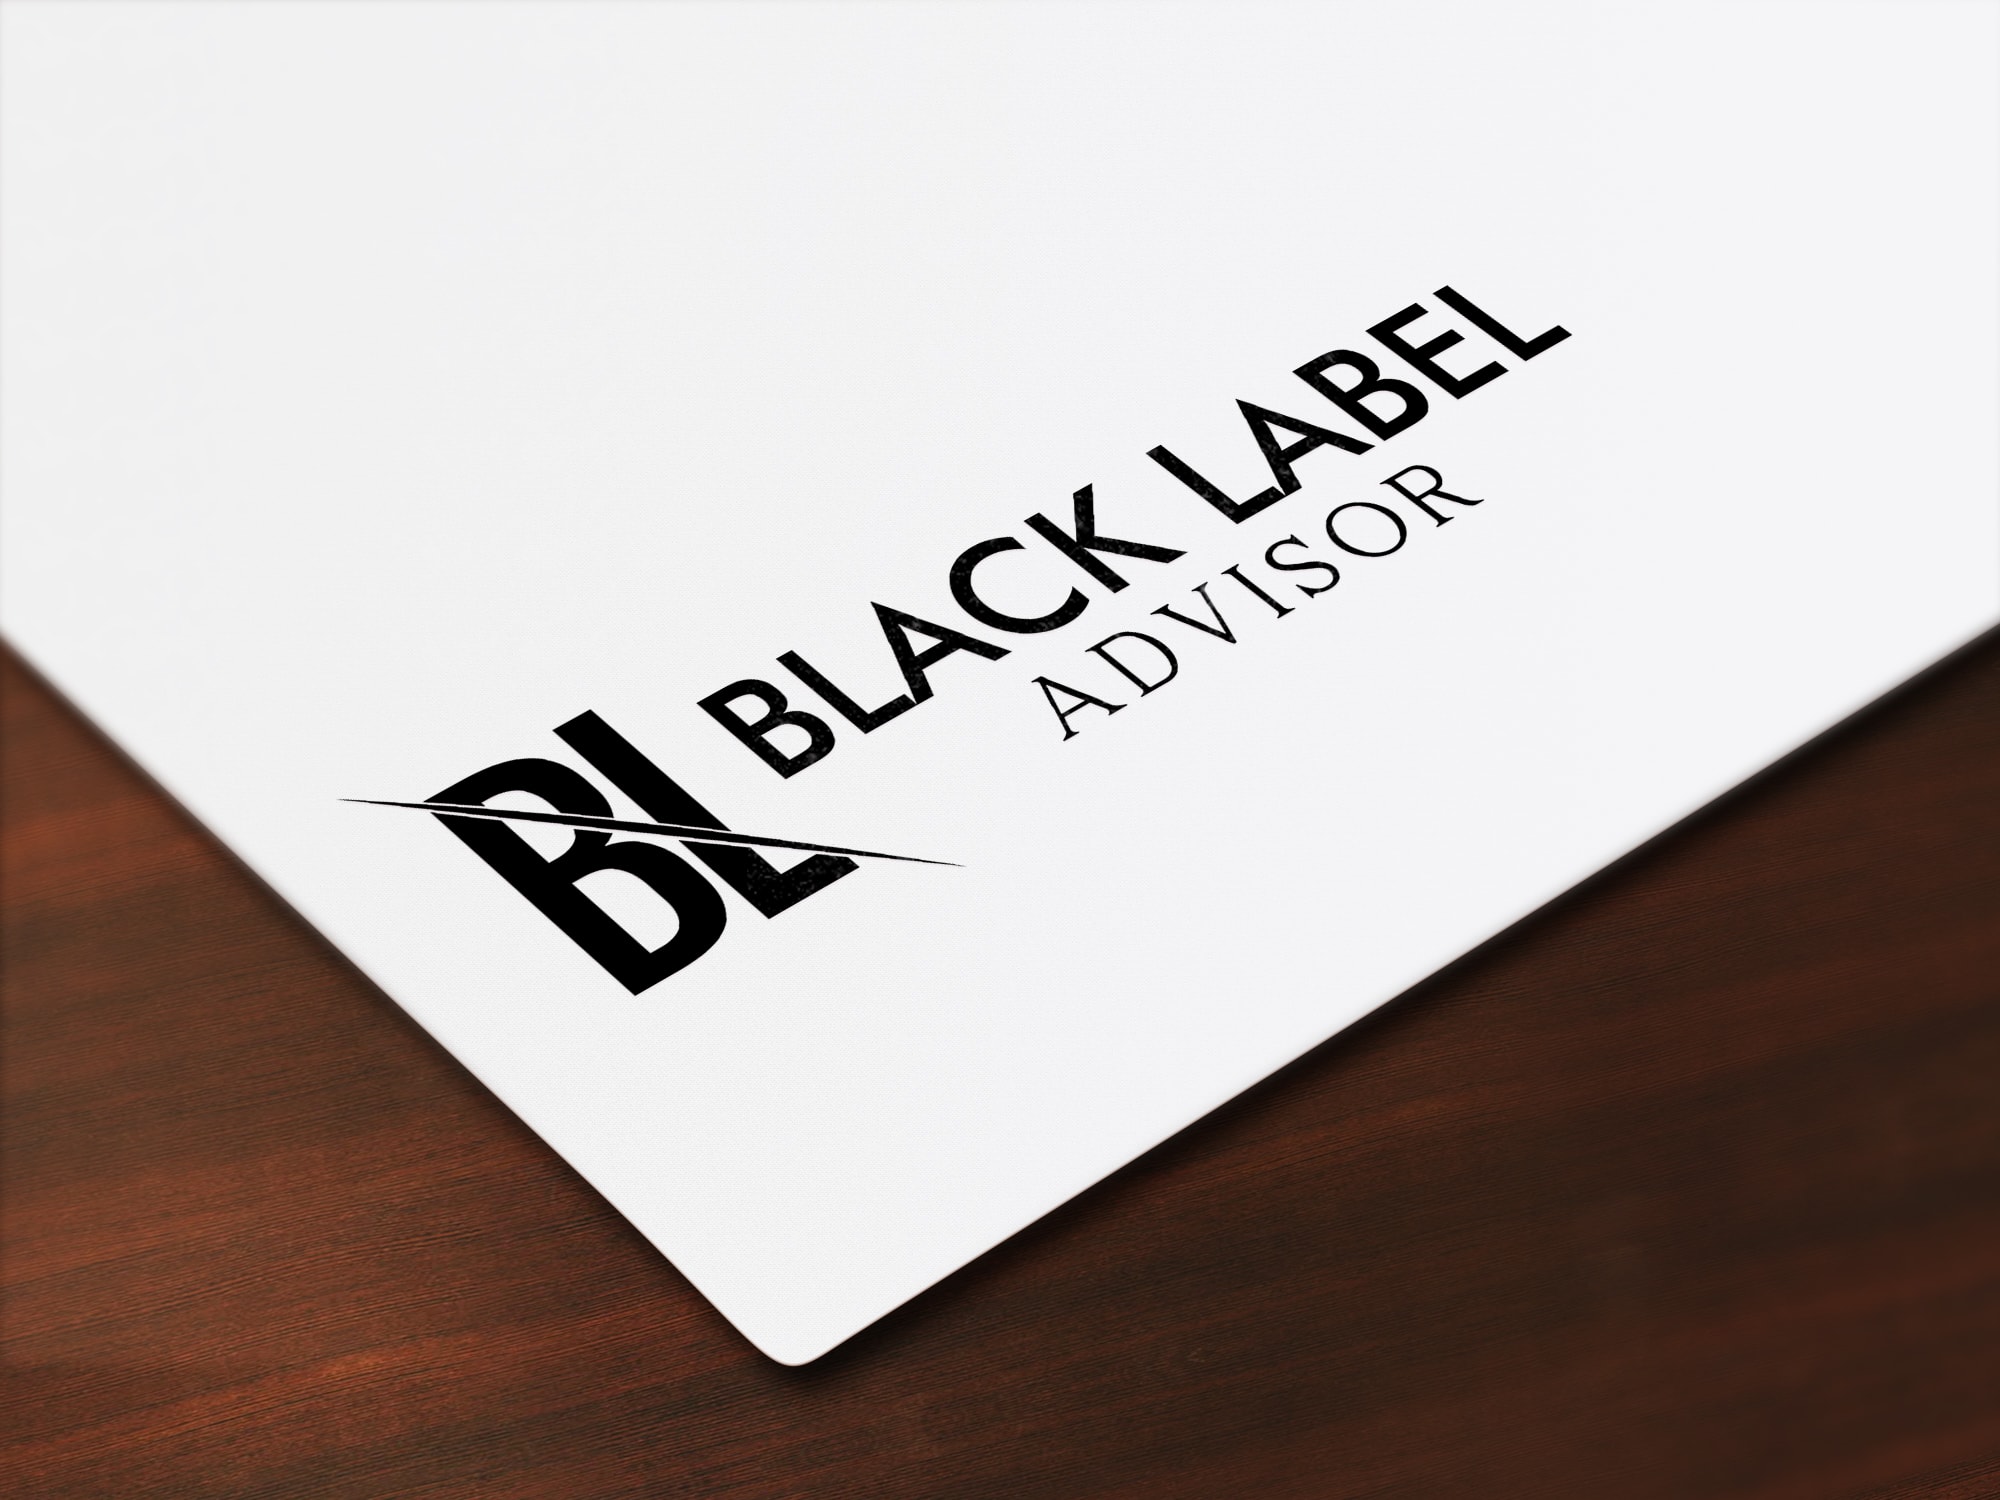 About Black Label Advisor